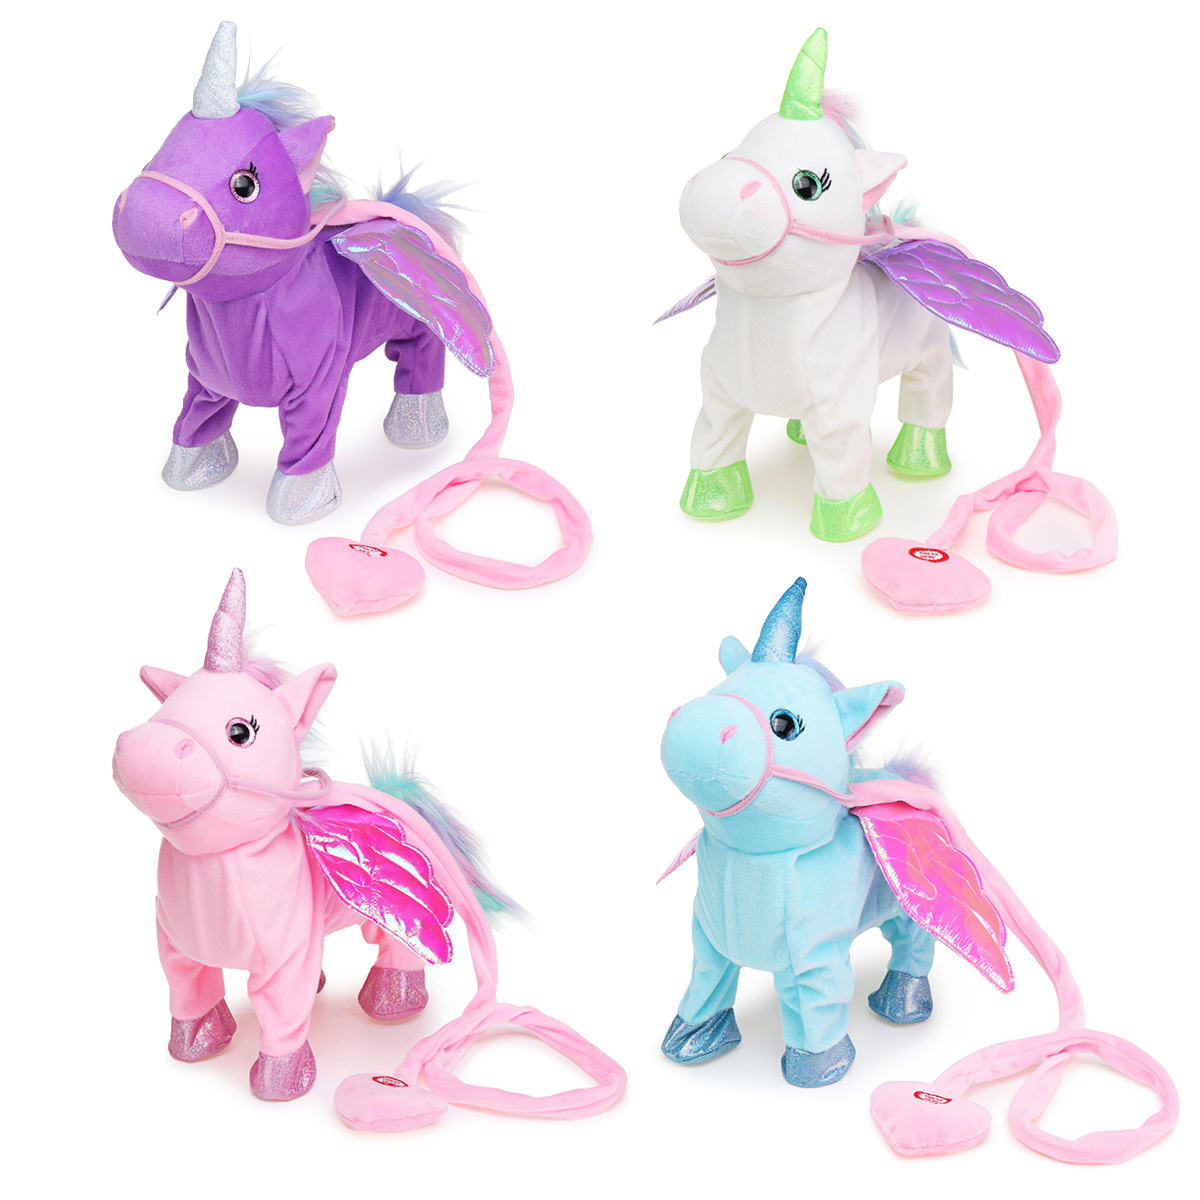 

Electric Magic Walking Wiggle Singing Unicorn Stuffed Plush Toy Kids Christmas Gifts